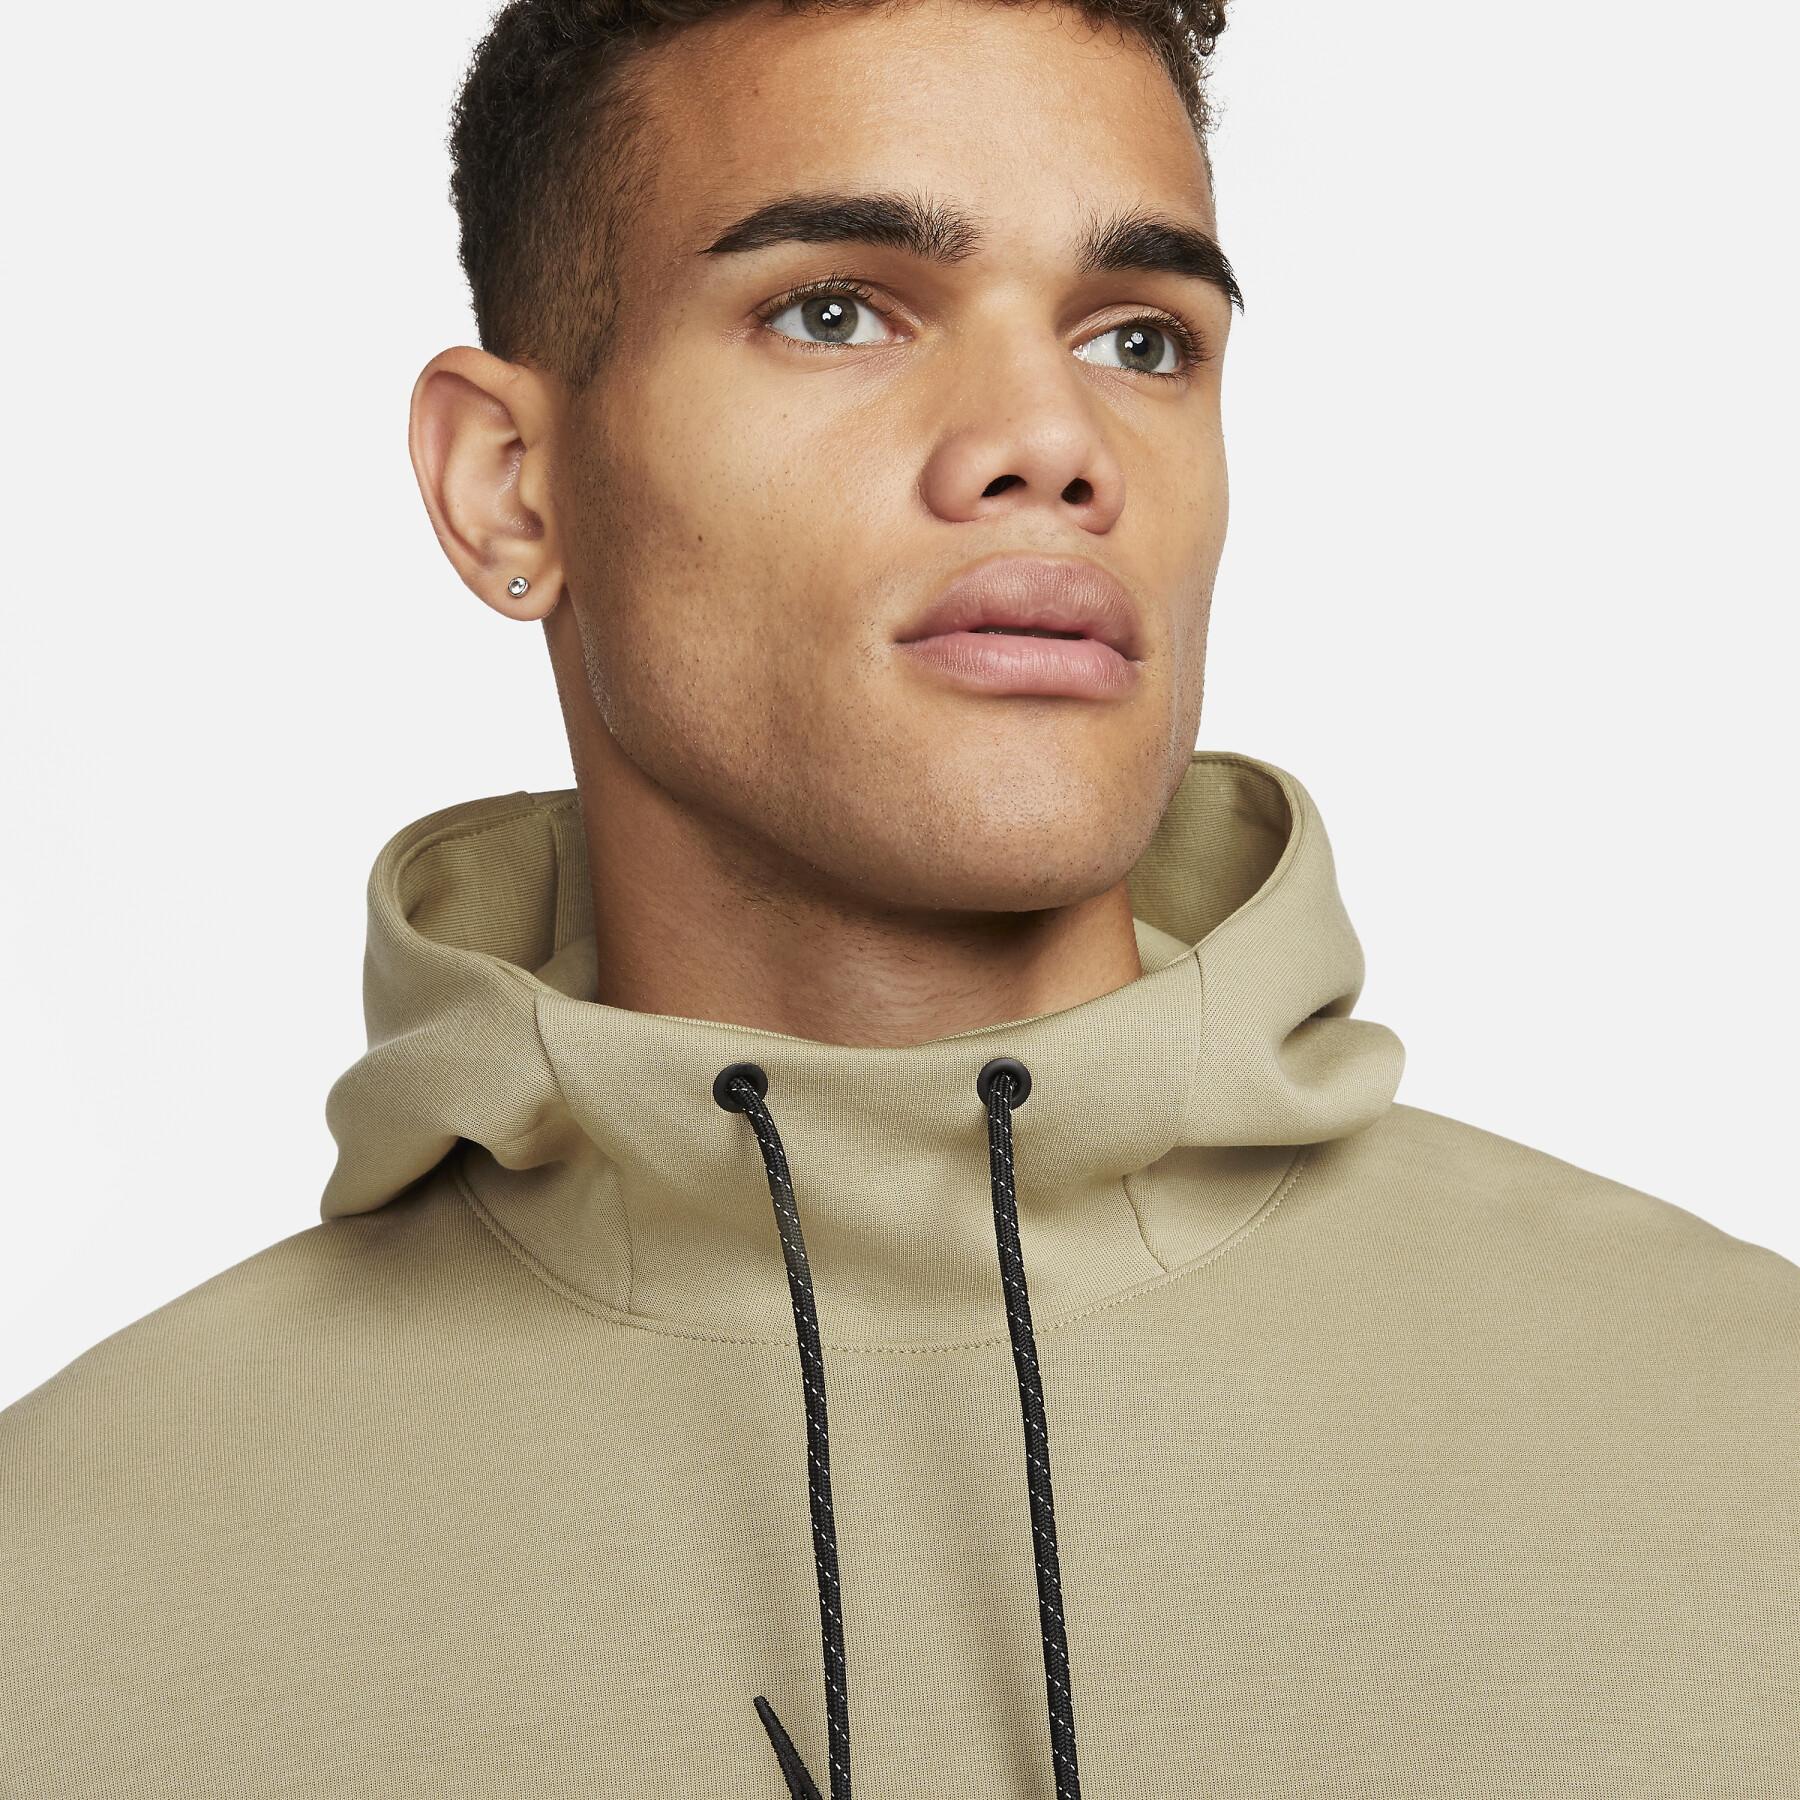 Sweatshirt hooded Nike Tech Fleece GX